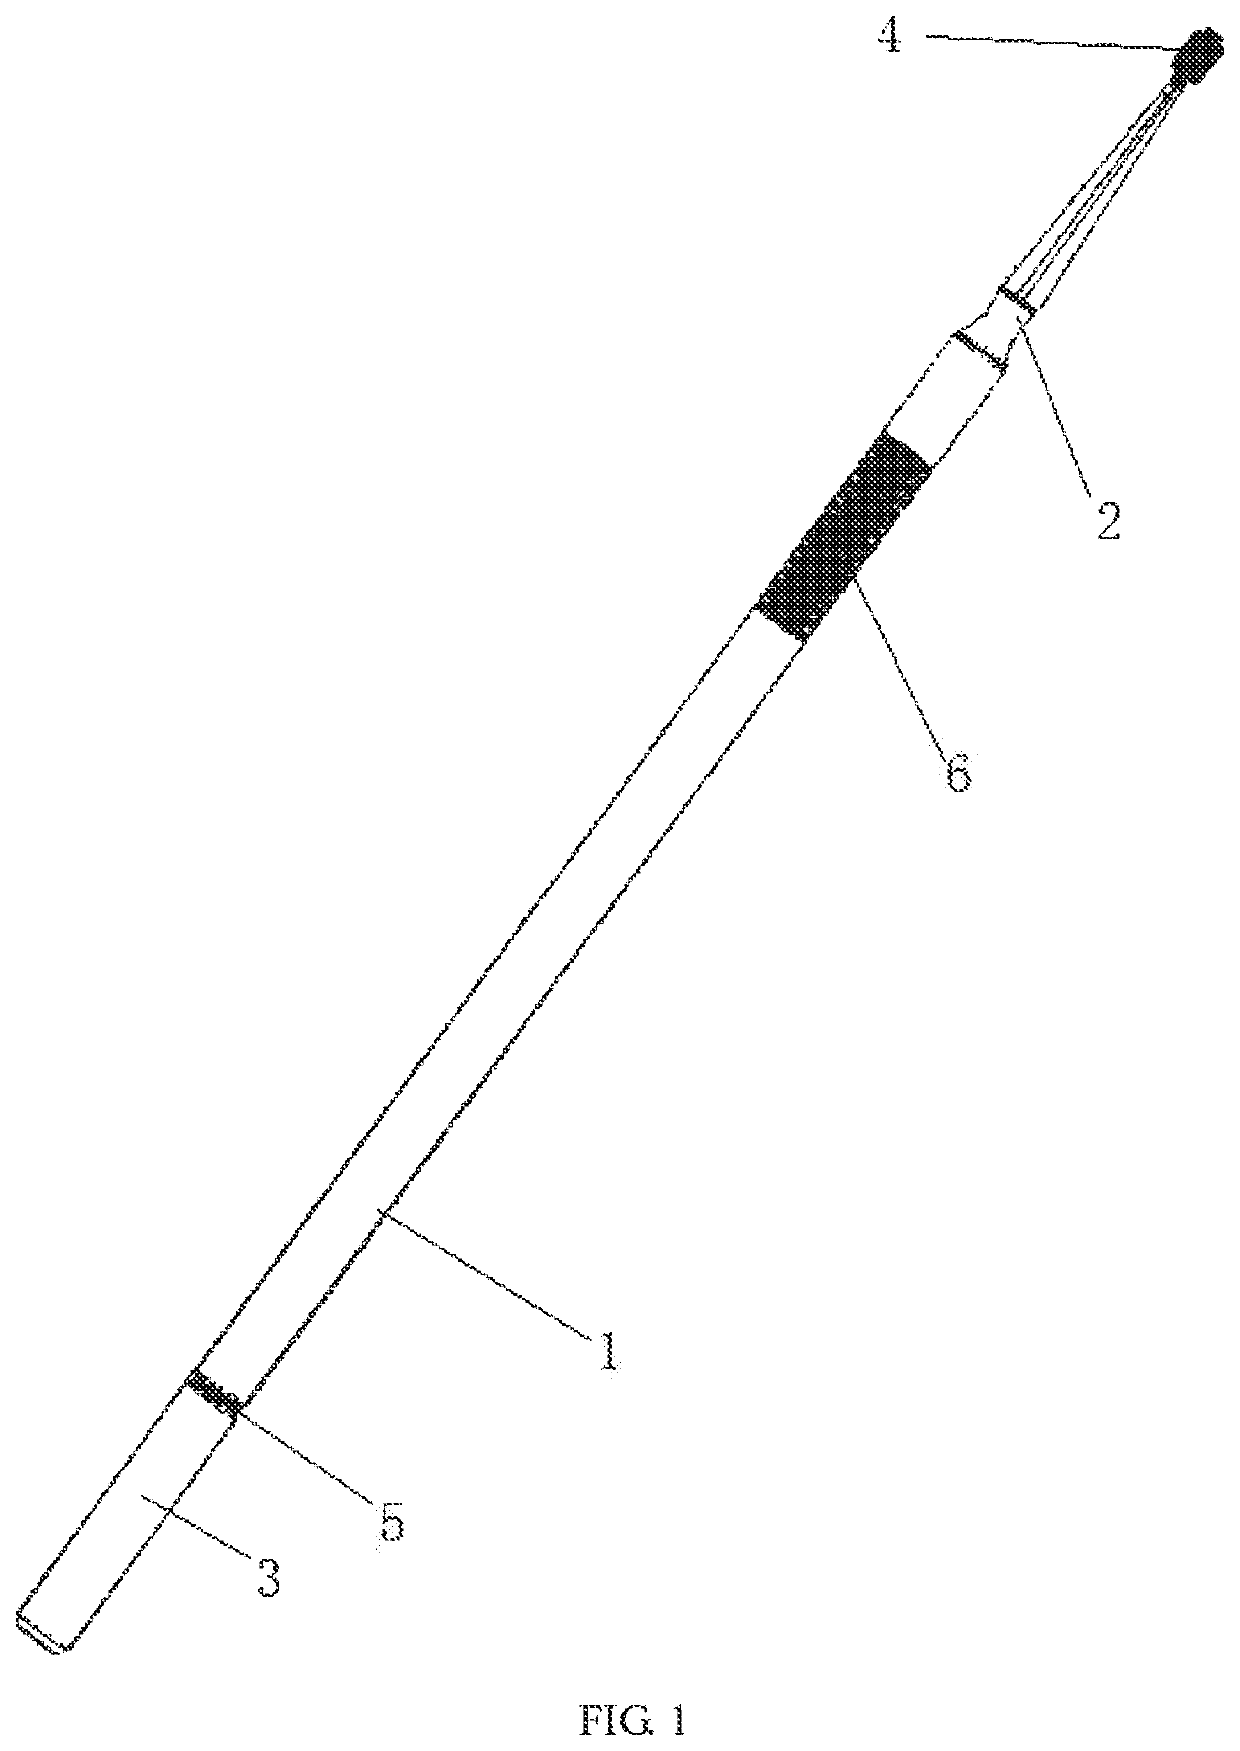 Integrally-formed flexible rubber applicator stick